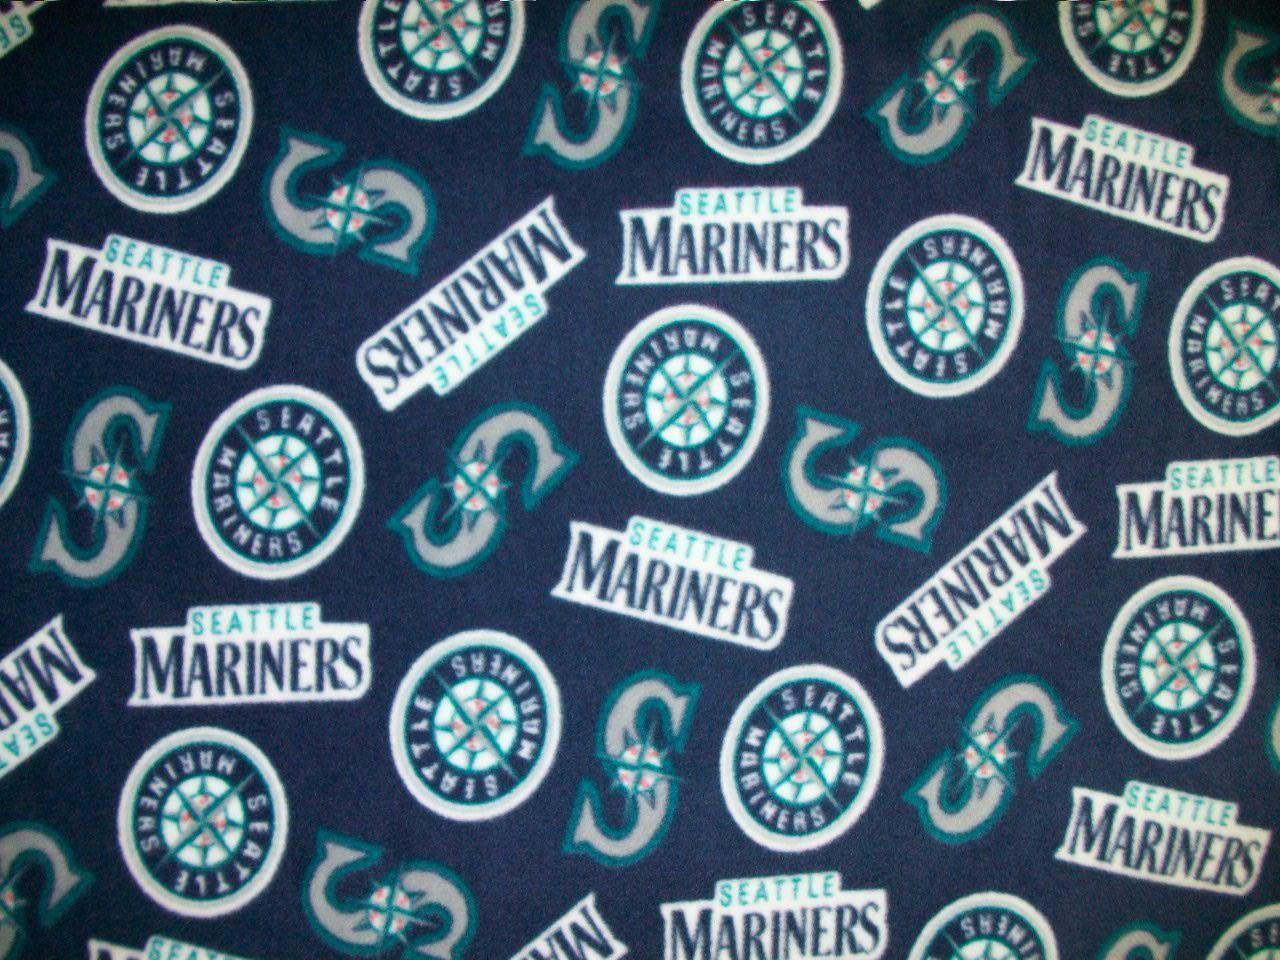 Seattle Mariners Wallpaper 2015